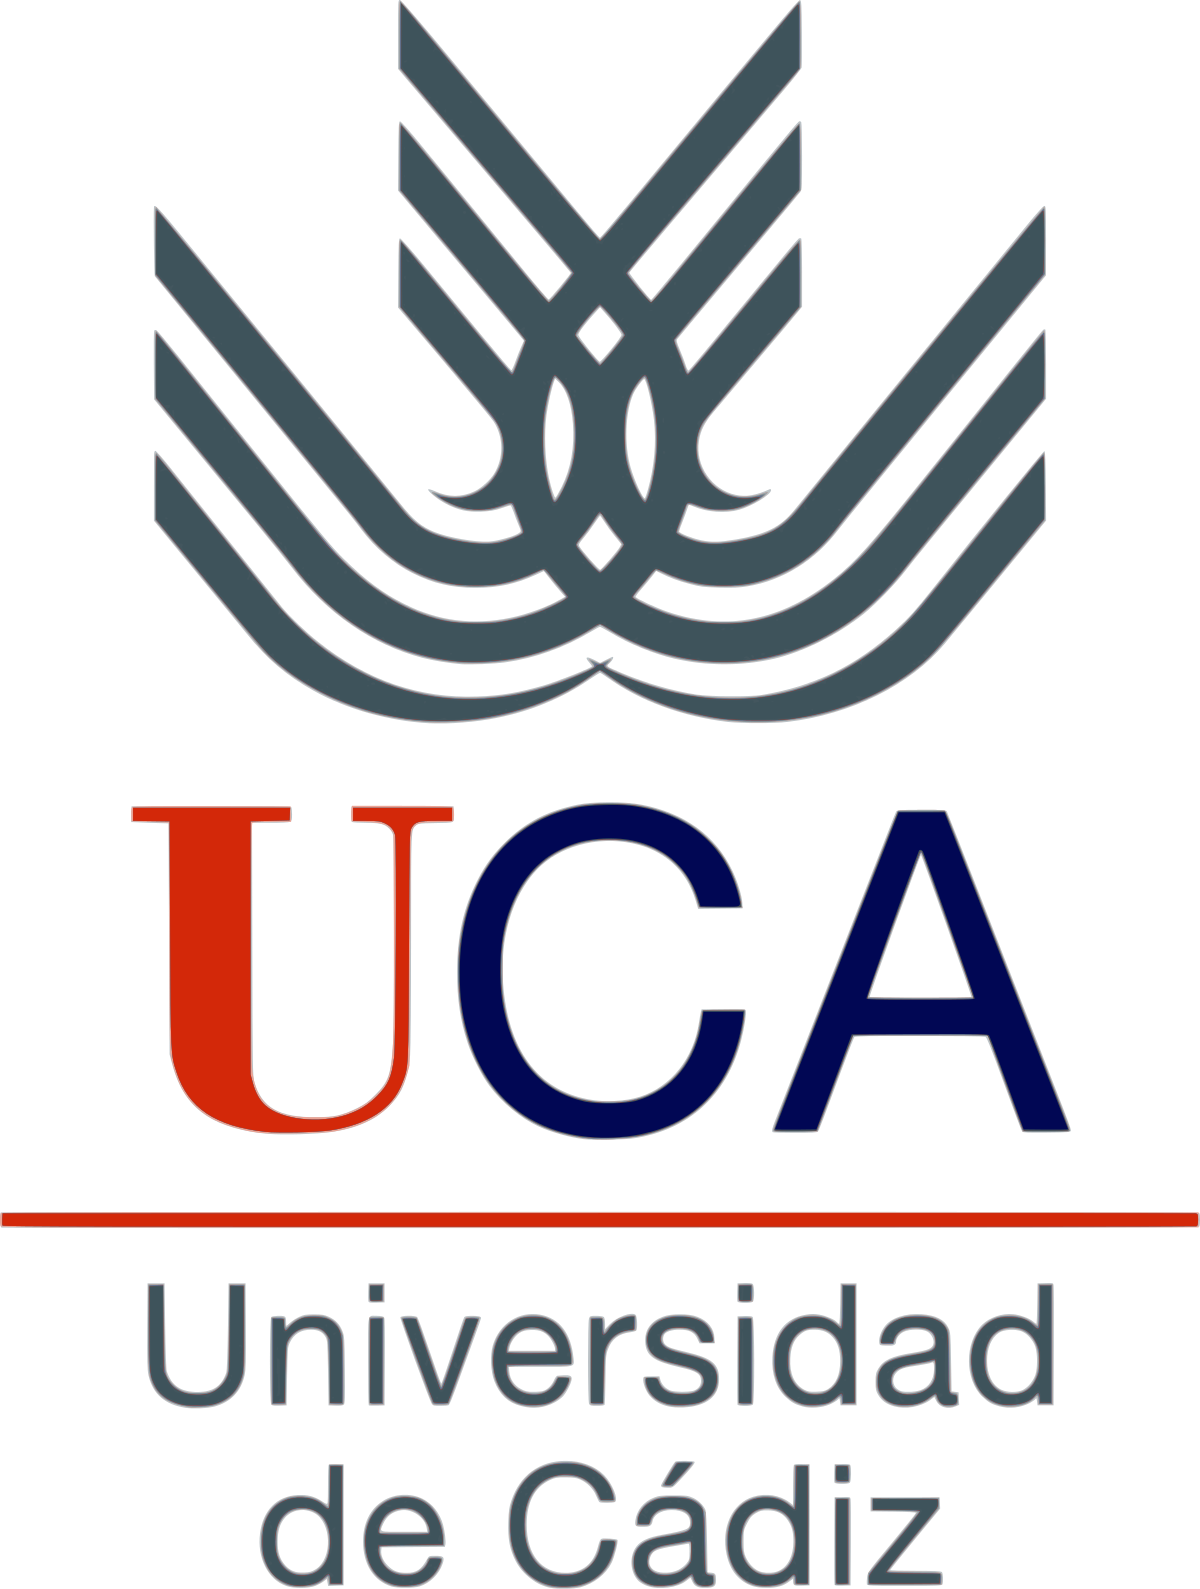 Университет Кадиса логотип.png